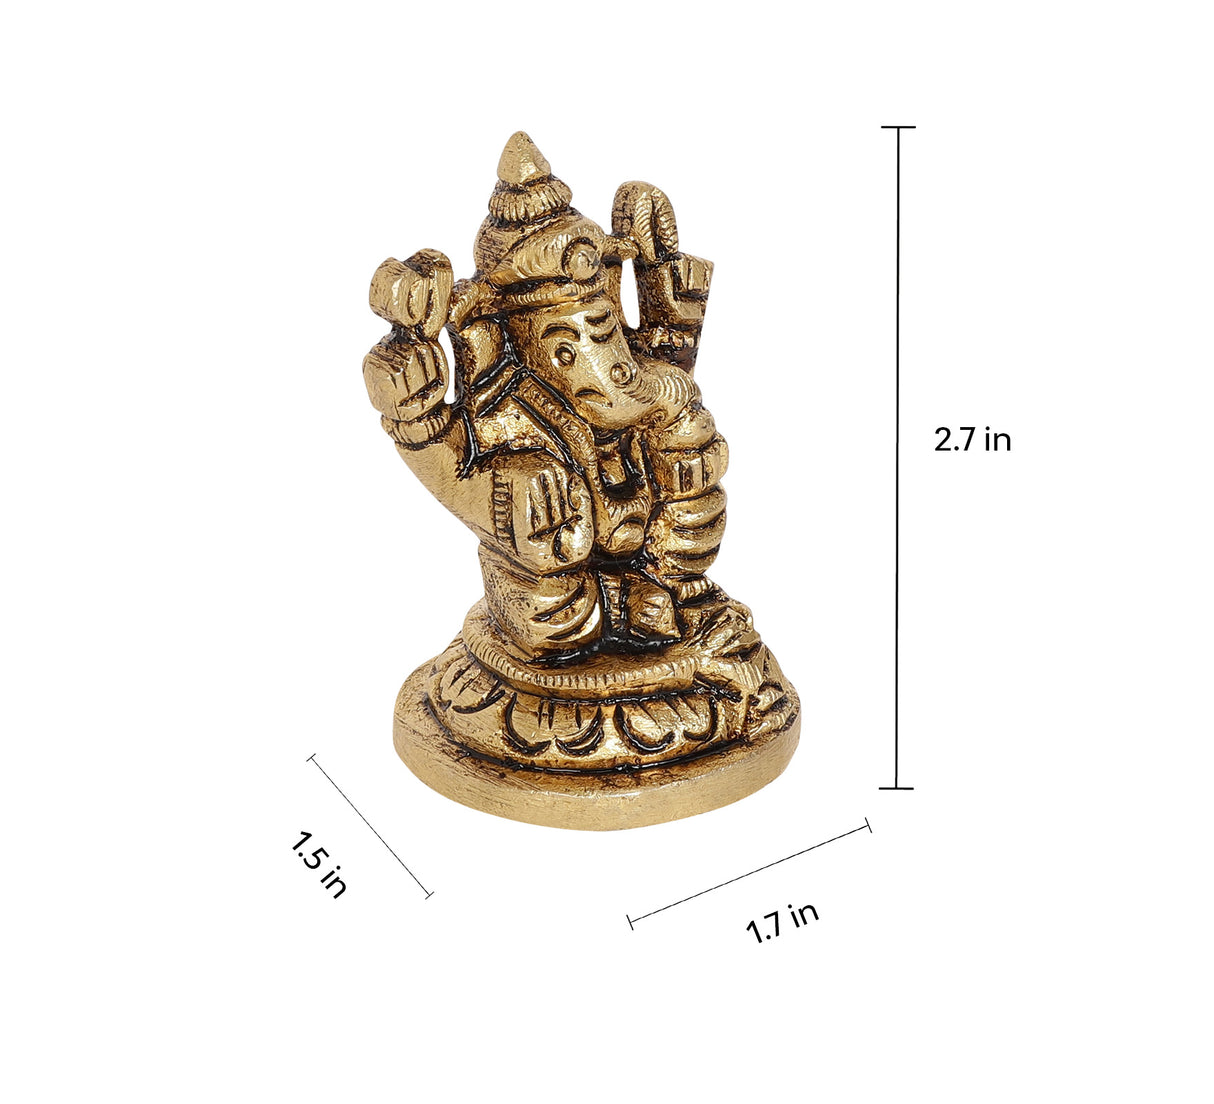 Ganapati idol with measurements 